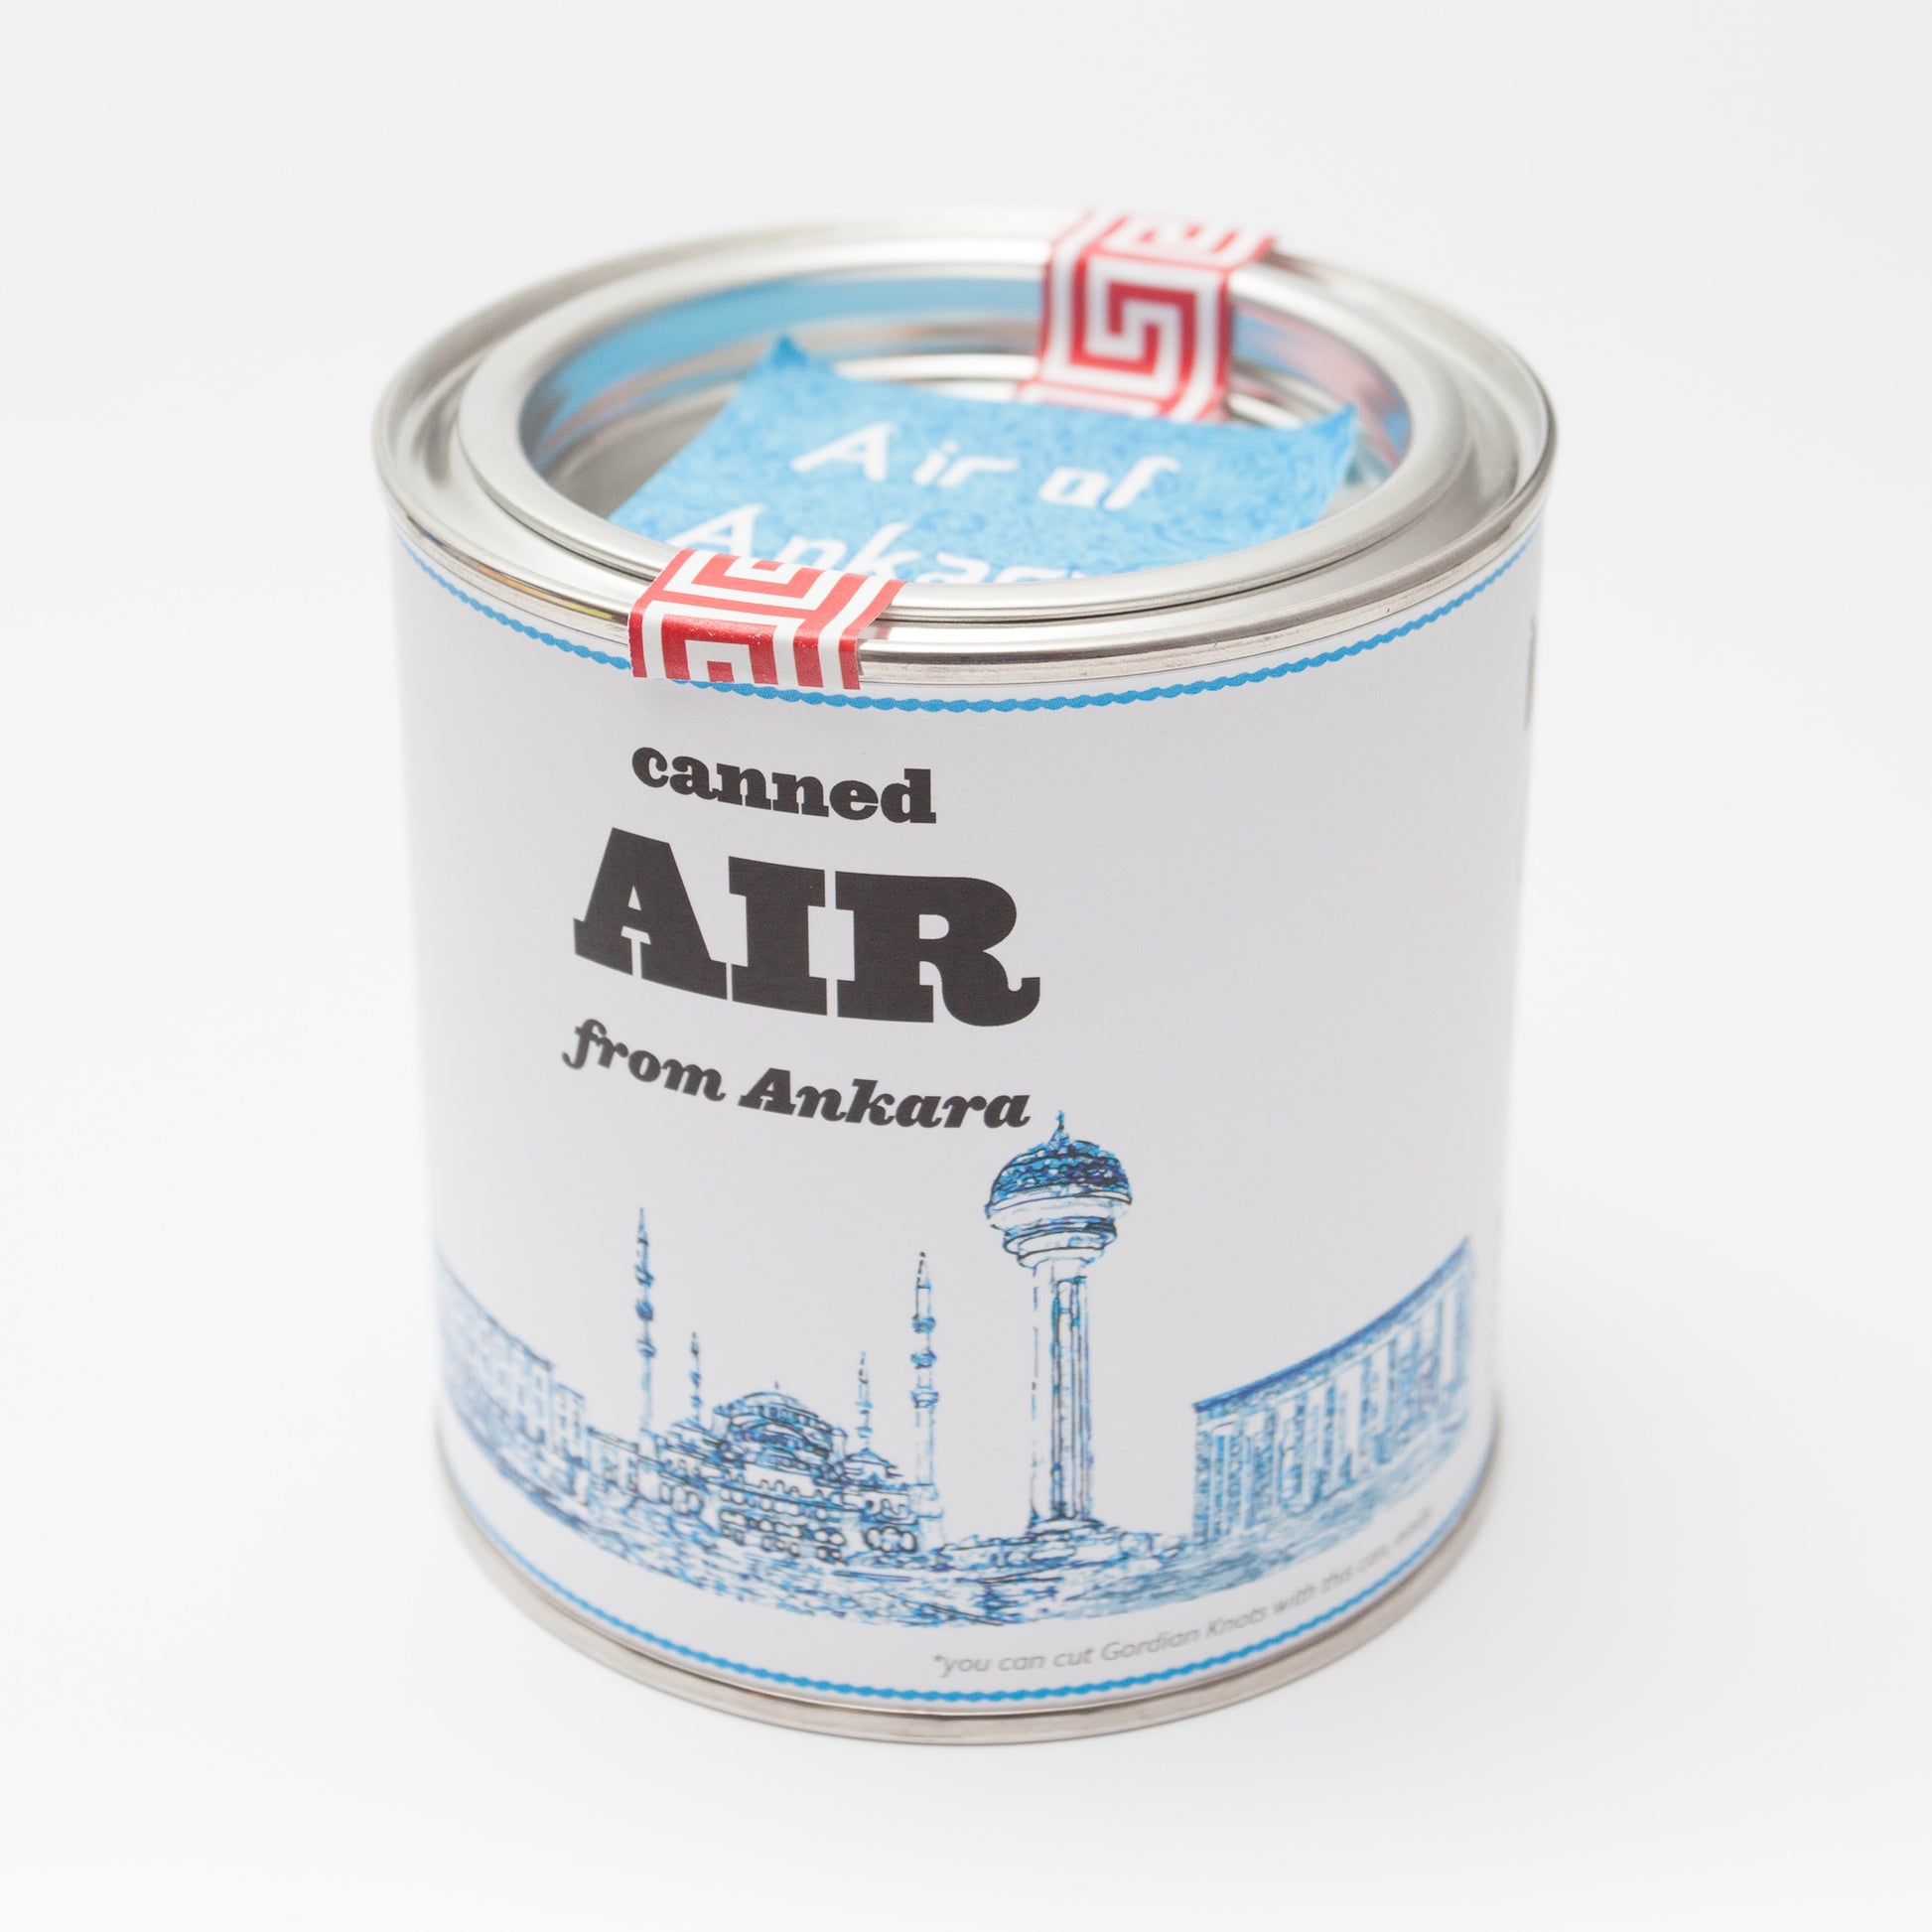 Canned Air from Ankara, Turkey